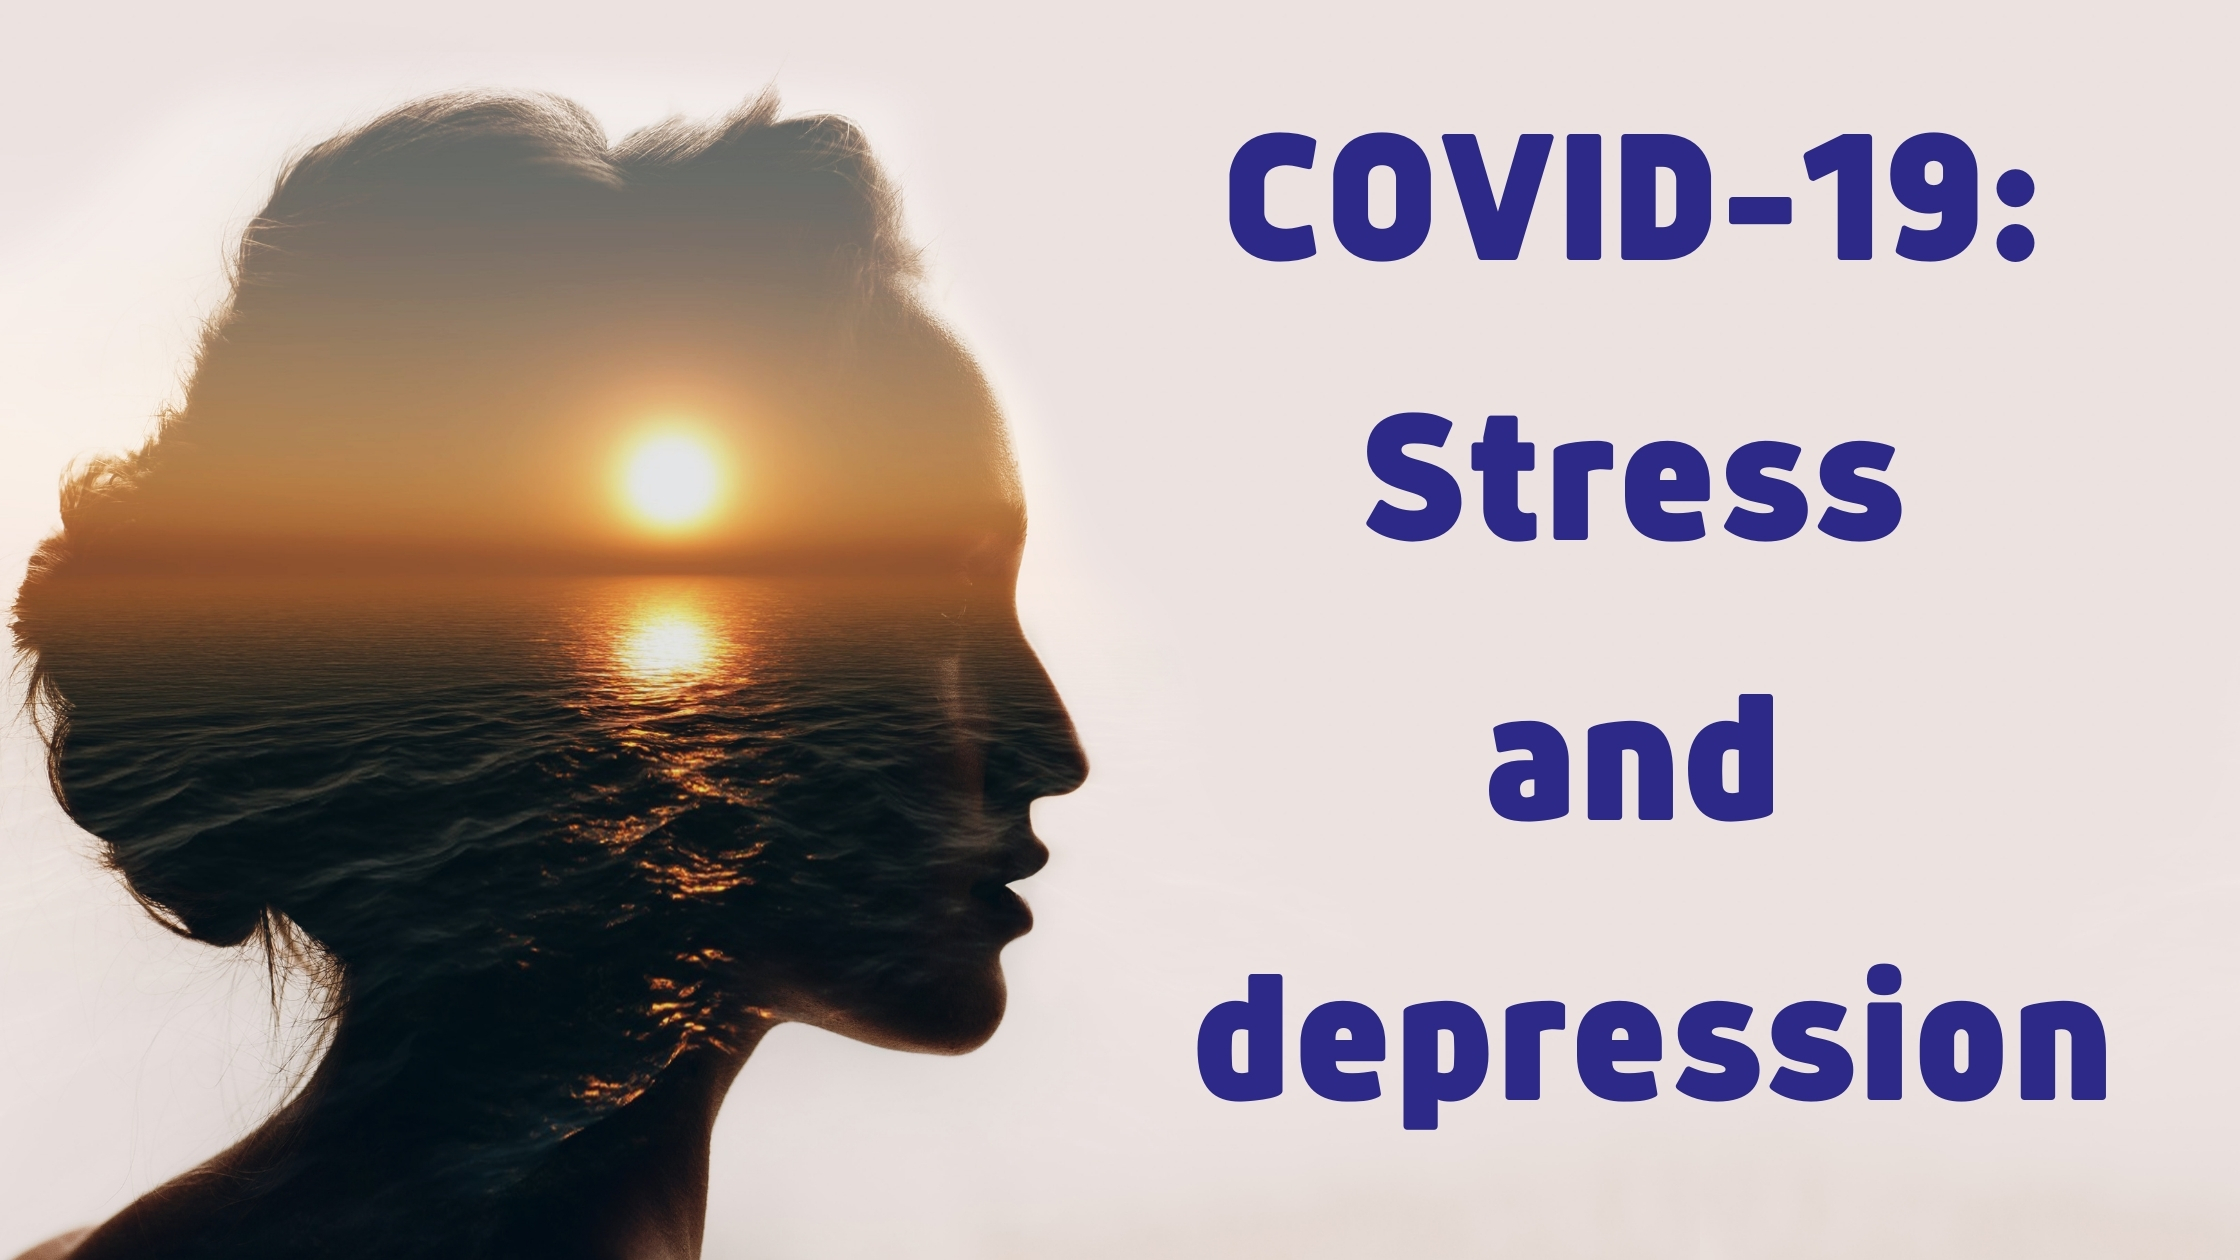 Covid-19: stress and depression